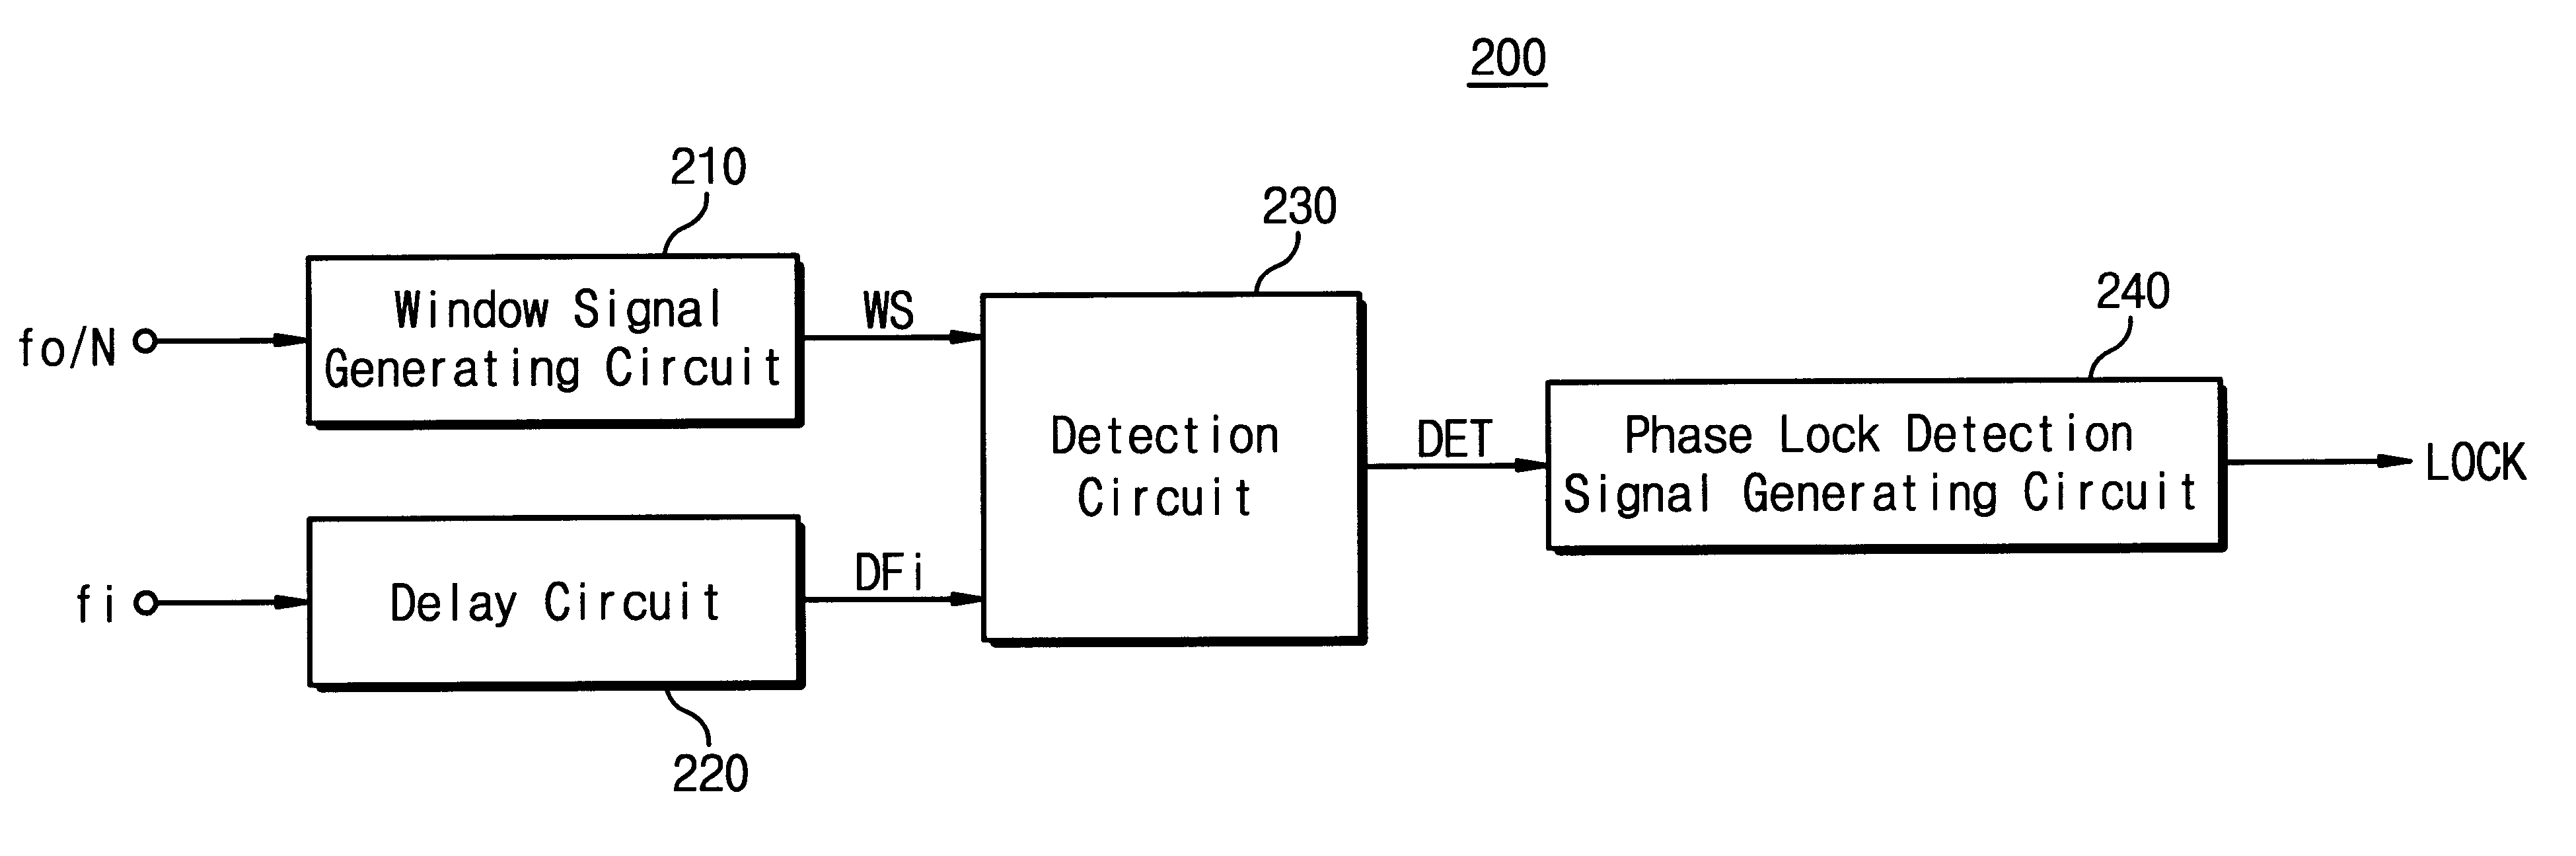 Phase lock detection circuit for phase-locked loop circuit